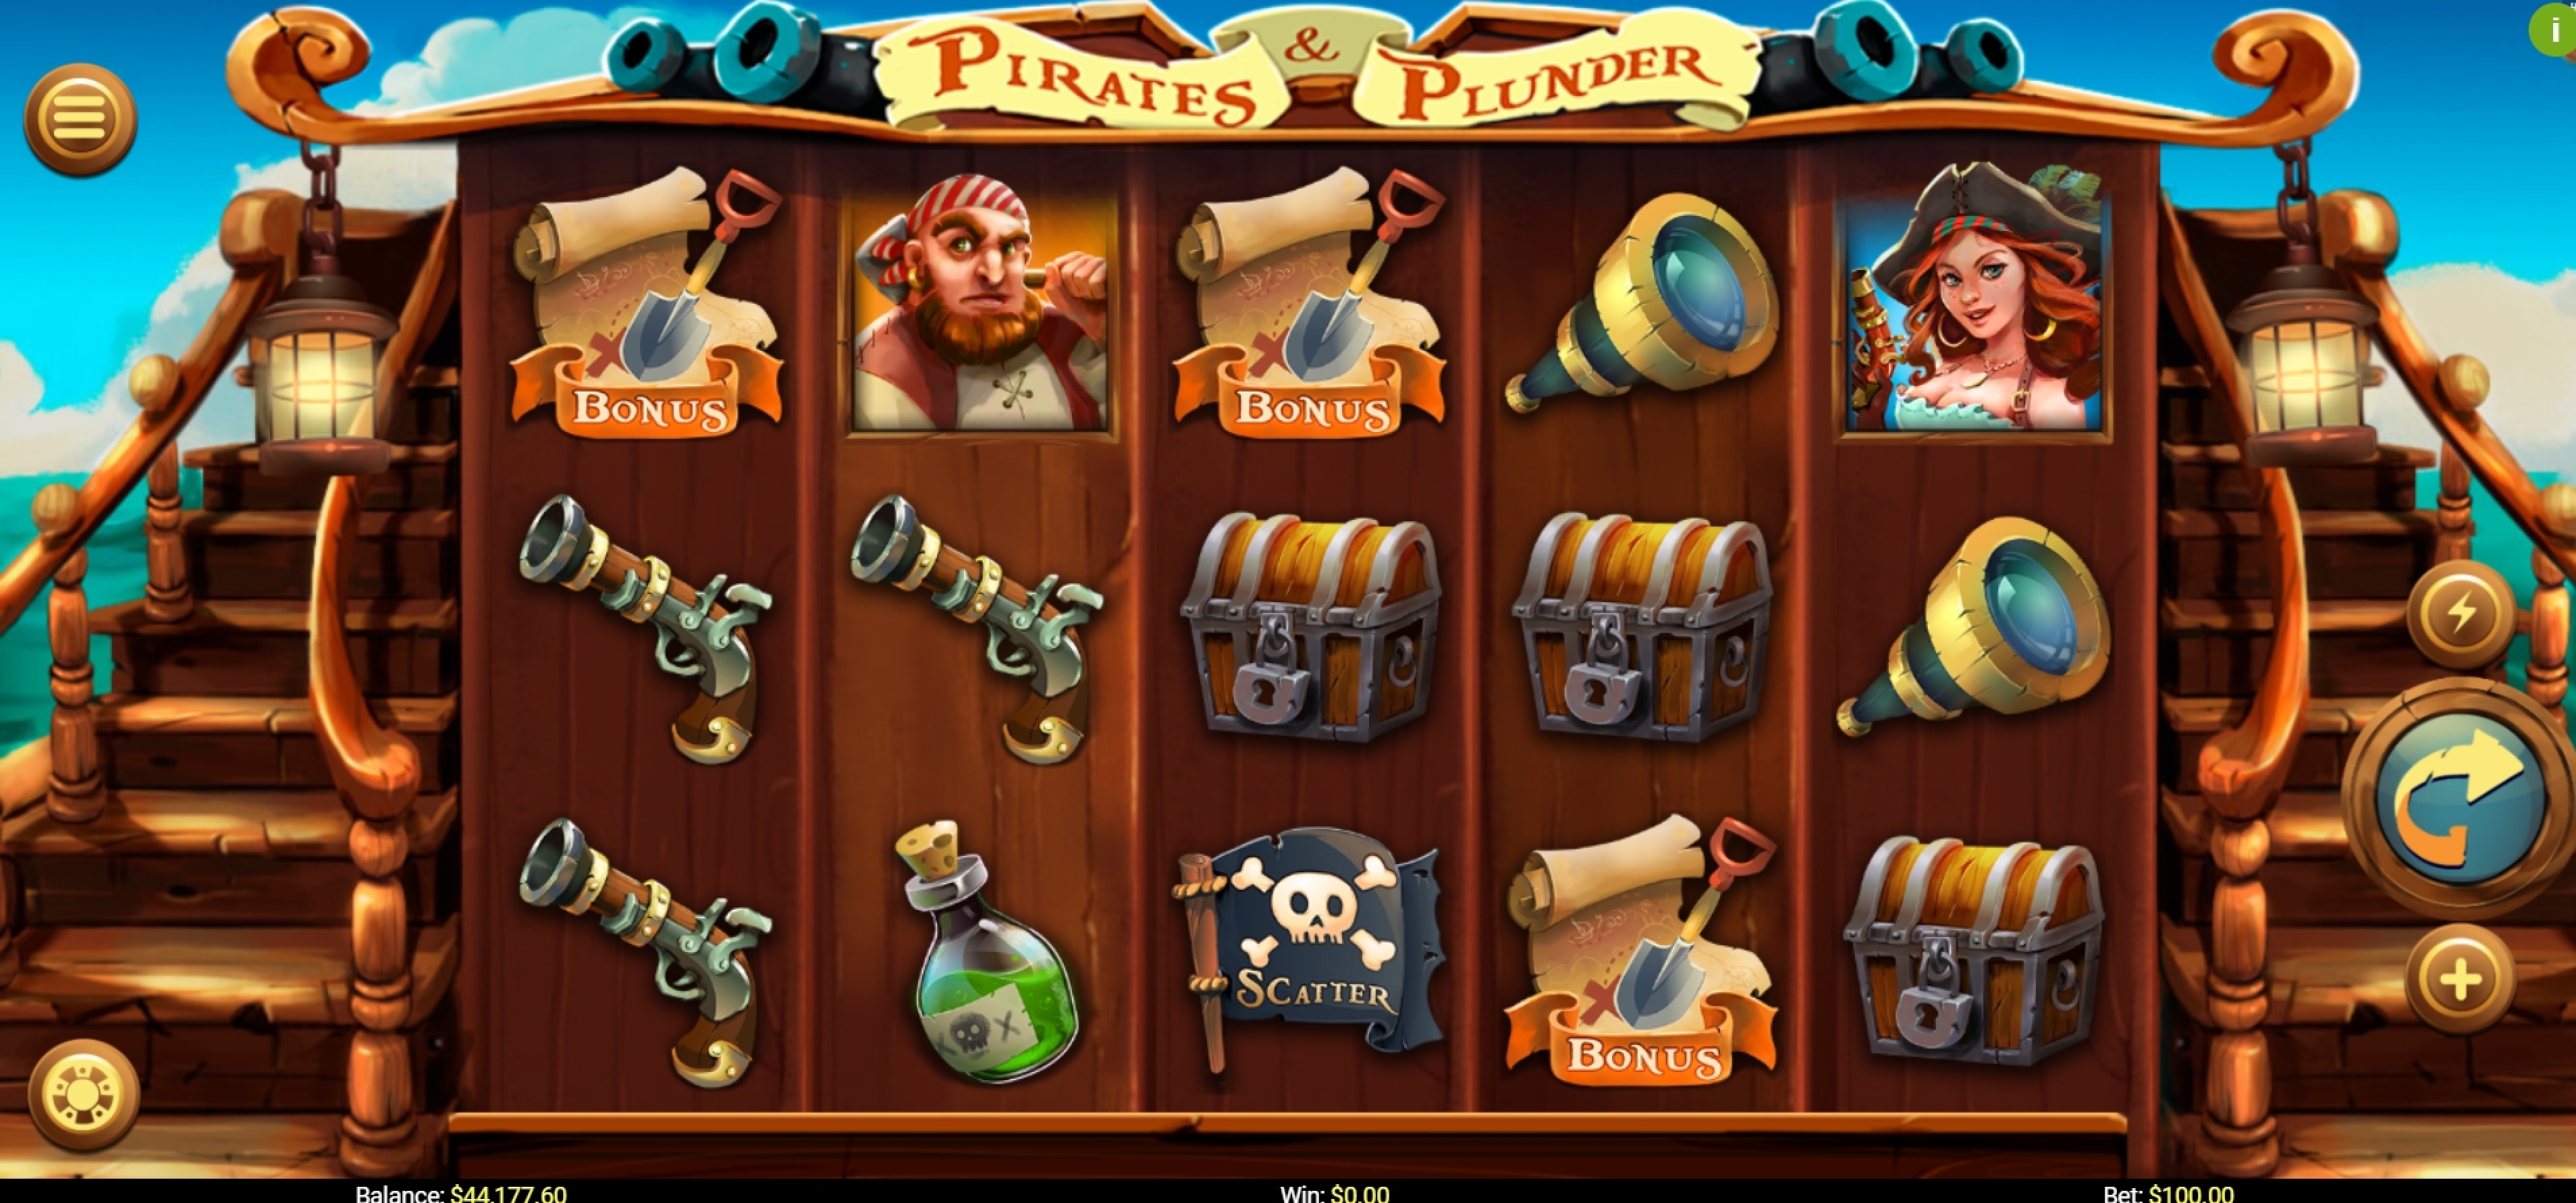 Pirate Plunder Slot Bonus Amazing 73,500 #casino #bigwin #lasvegas #bonus #jackpot